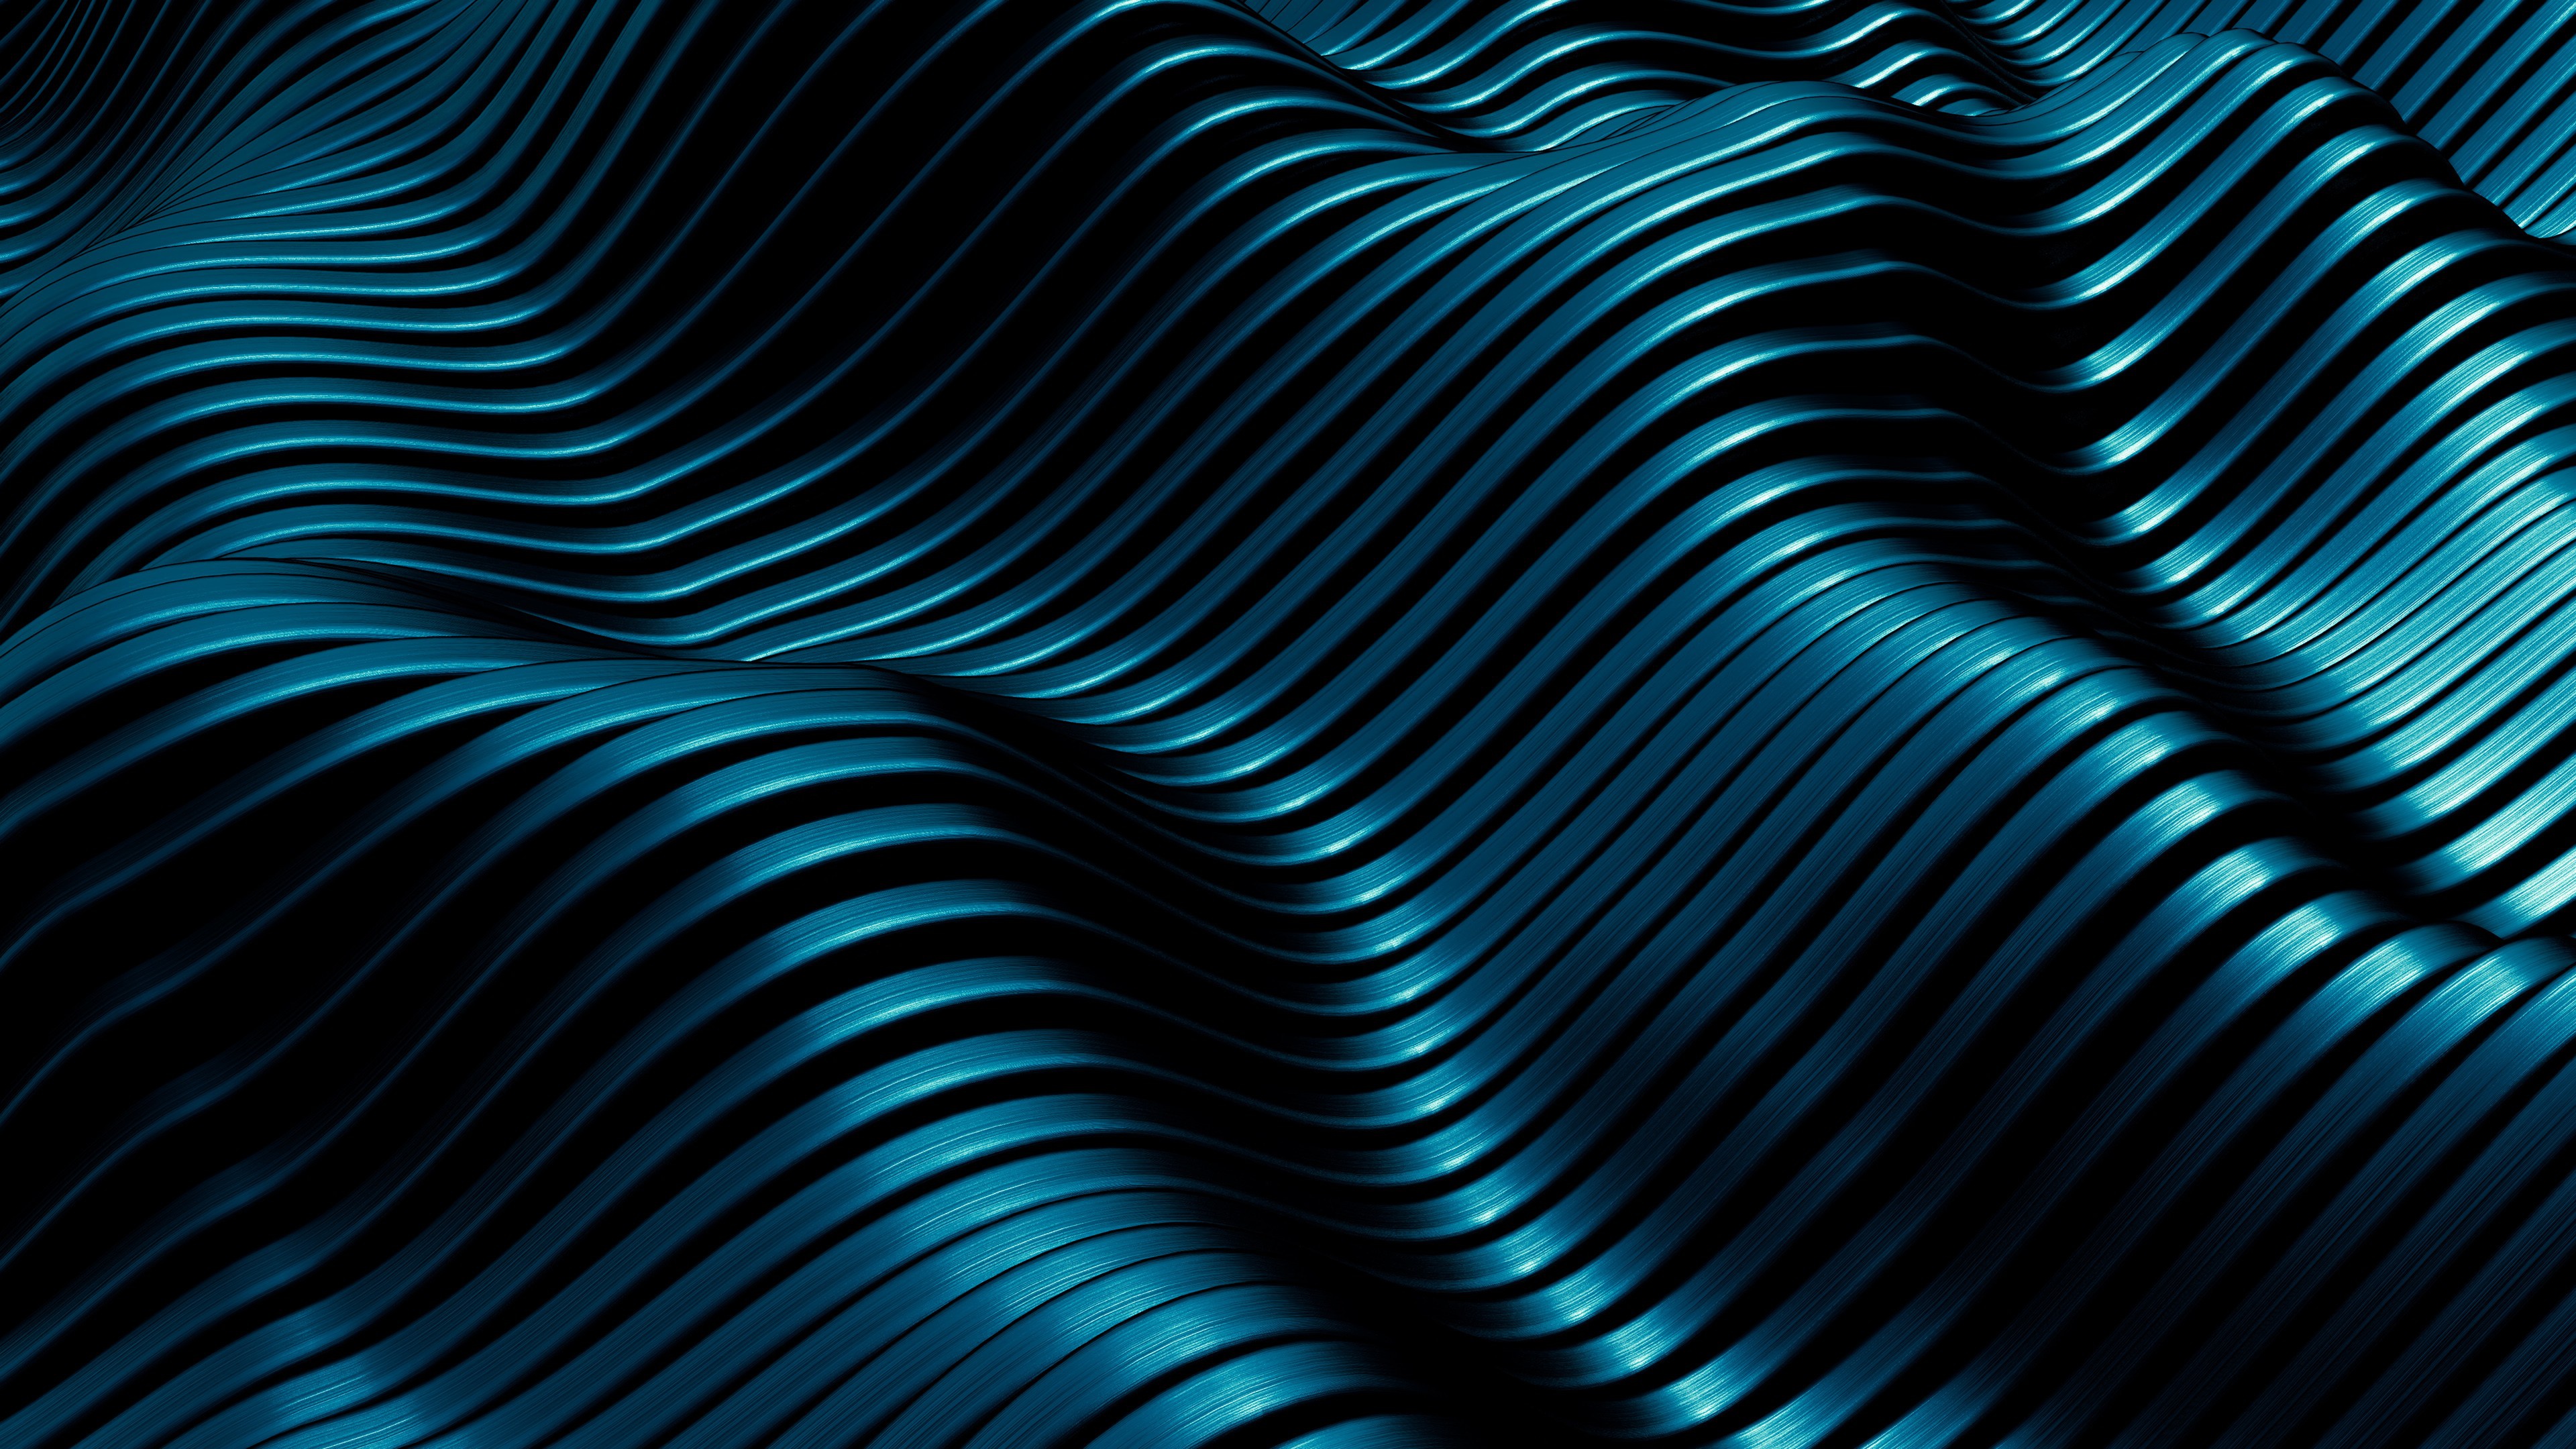 Abstract Wave 4k Ultra HD Wallpaper By Maria Zaitseva